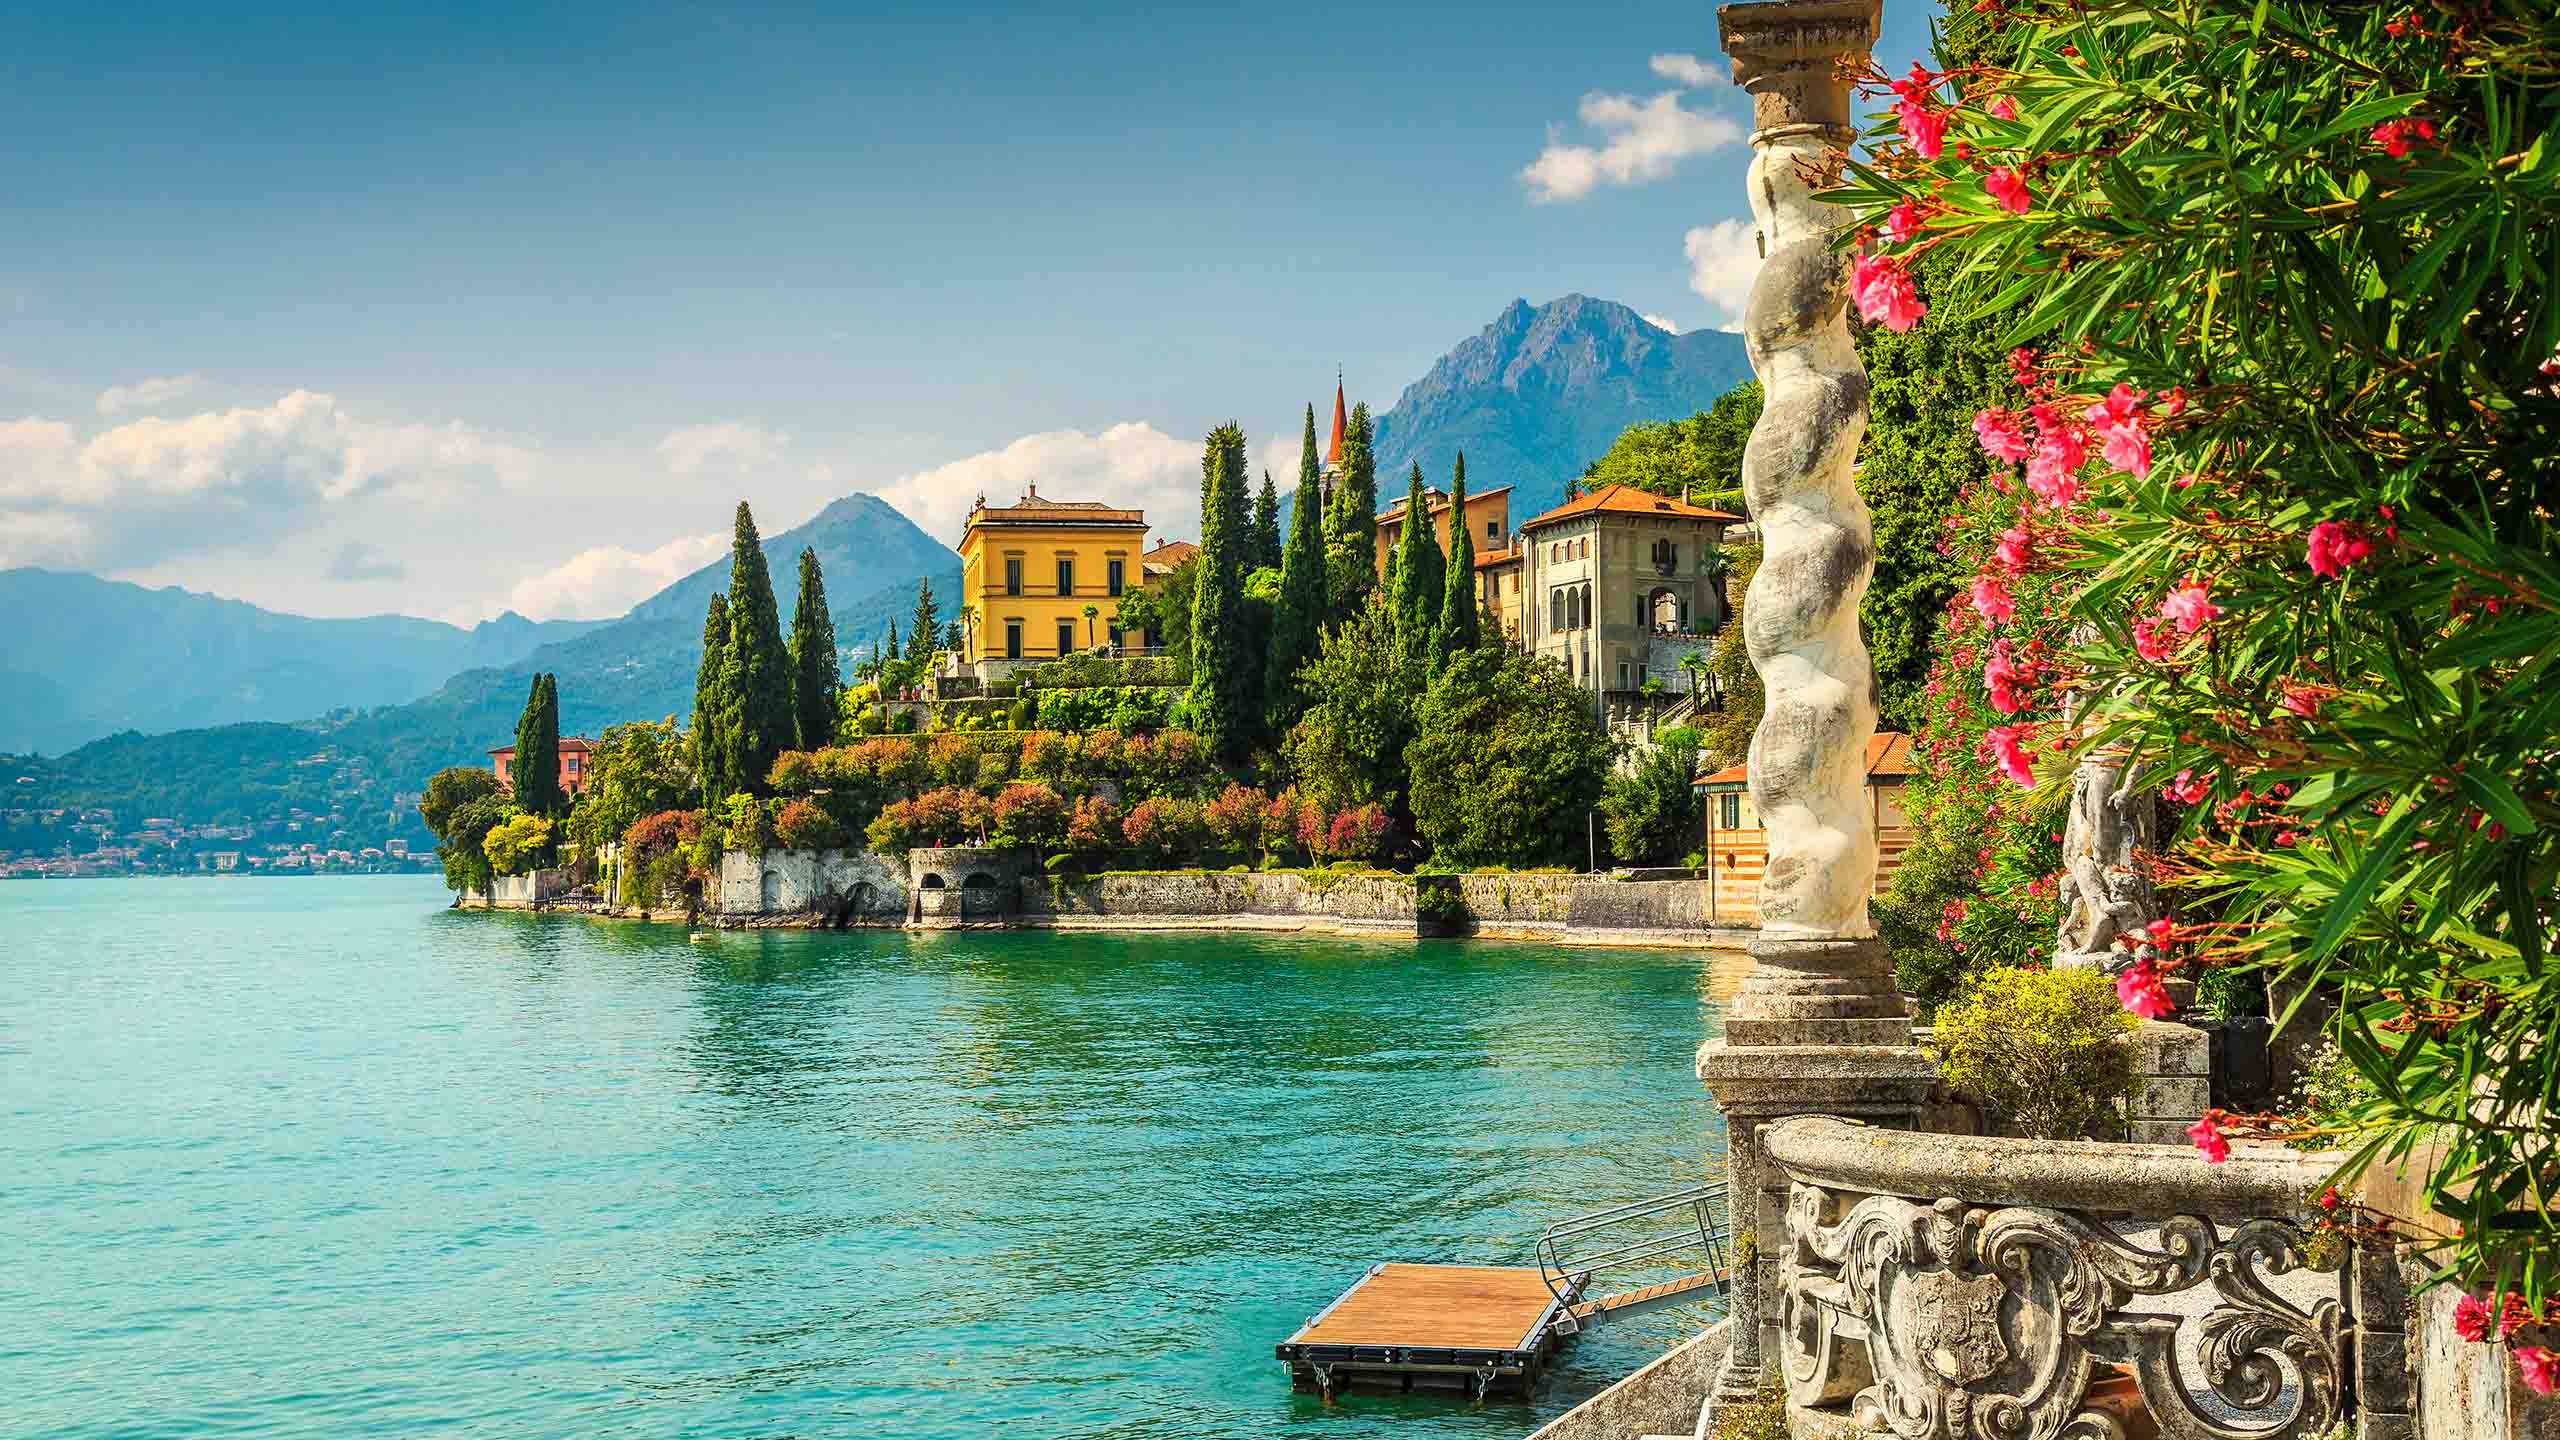 Lake Como, Italy by Gaspar Janos